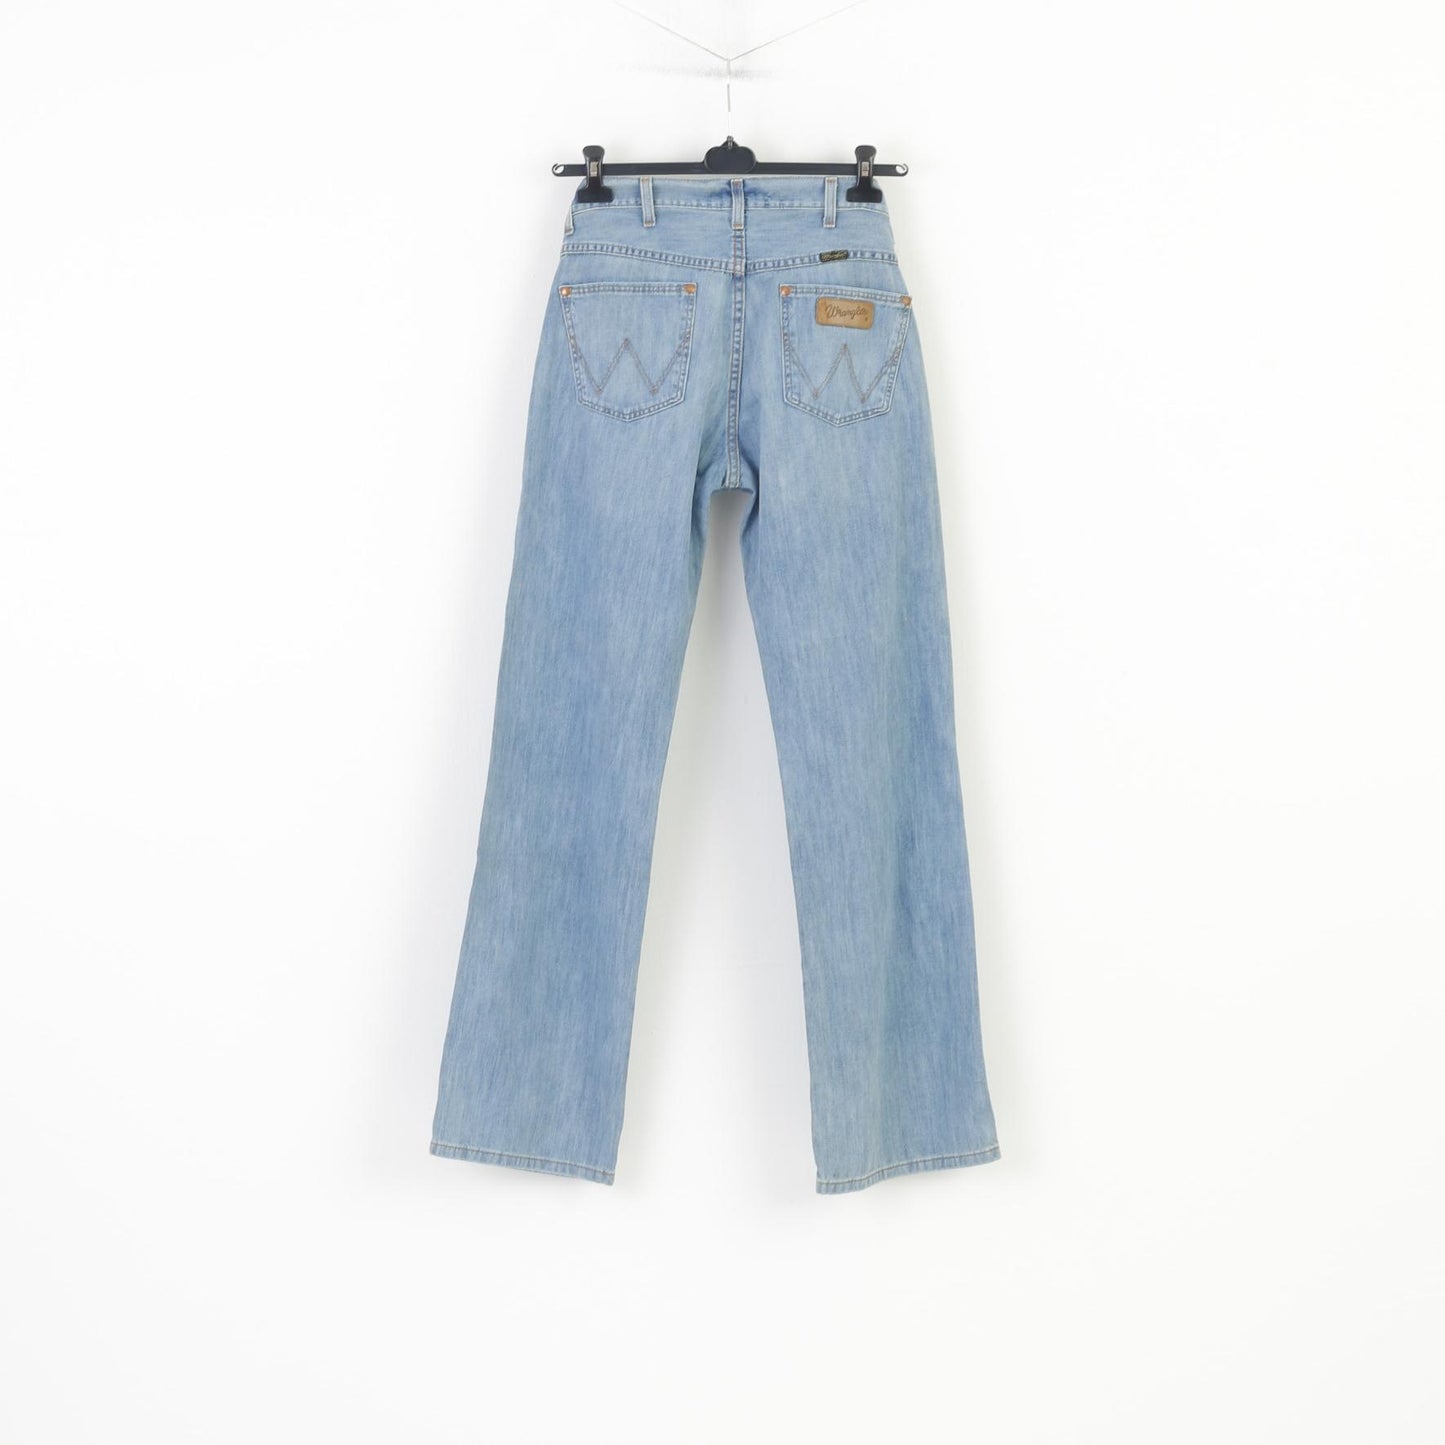 Pantaloni Wrangler Uomo 31 Pantaloni Denim Blue Jeans Cotone Vintage